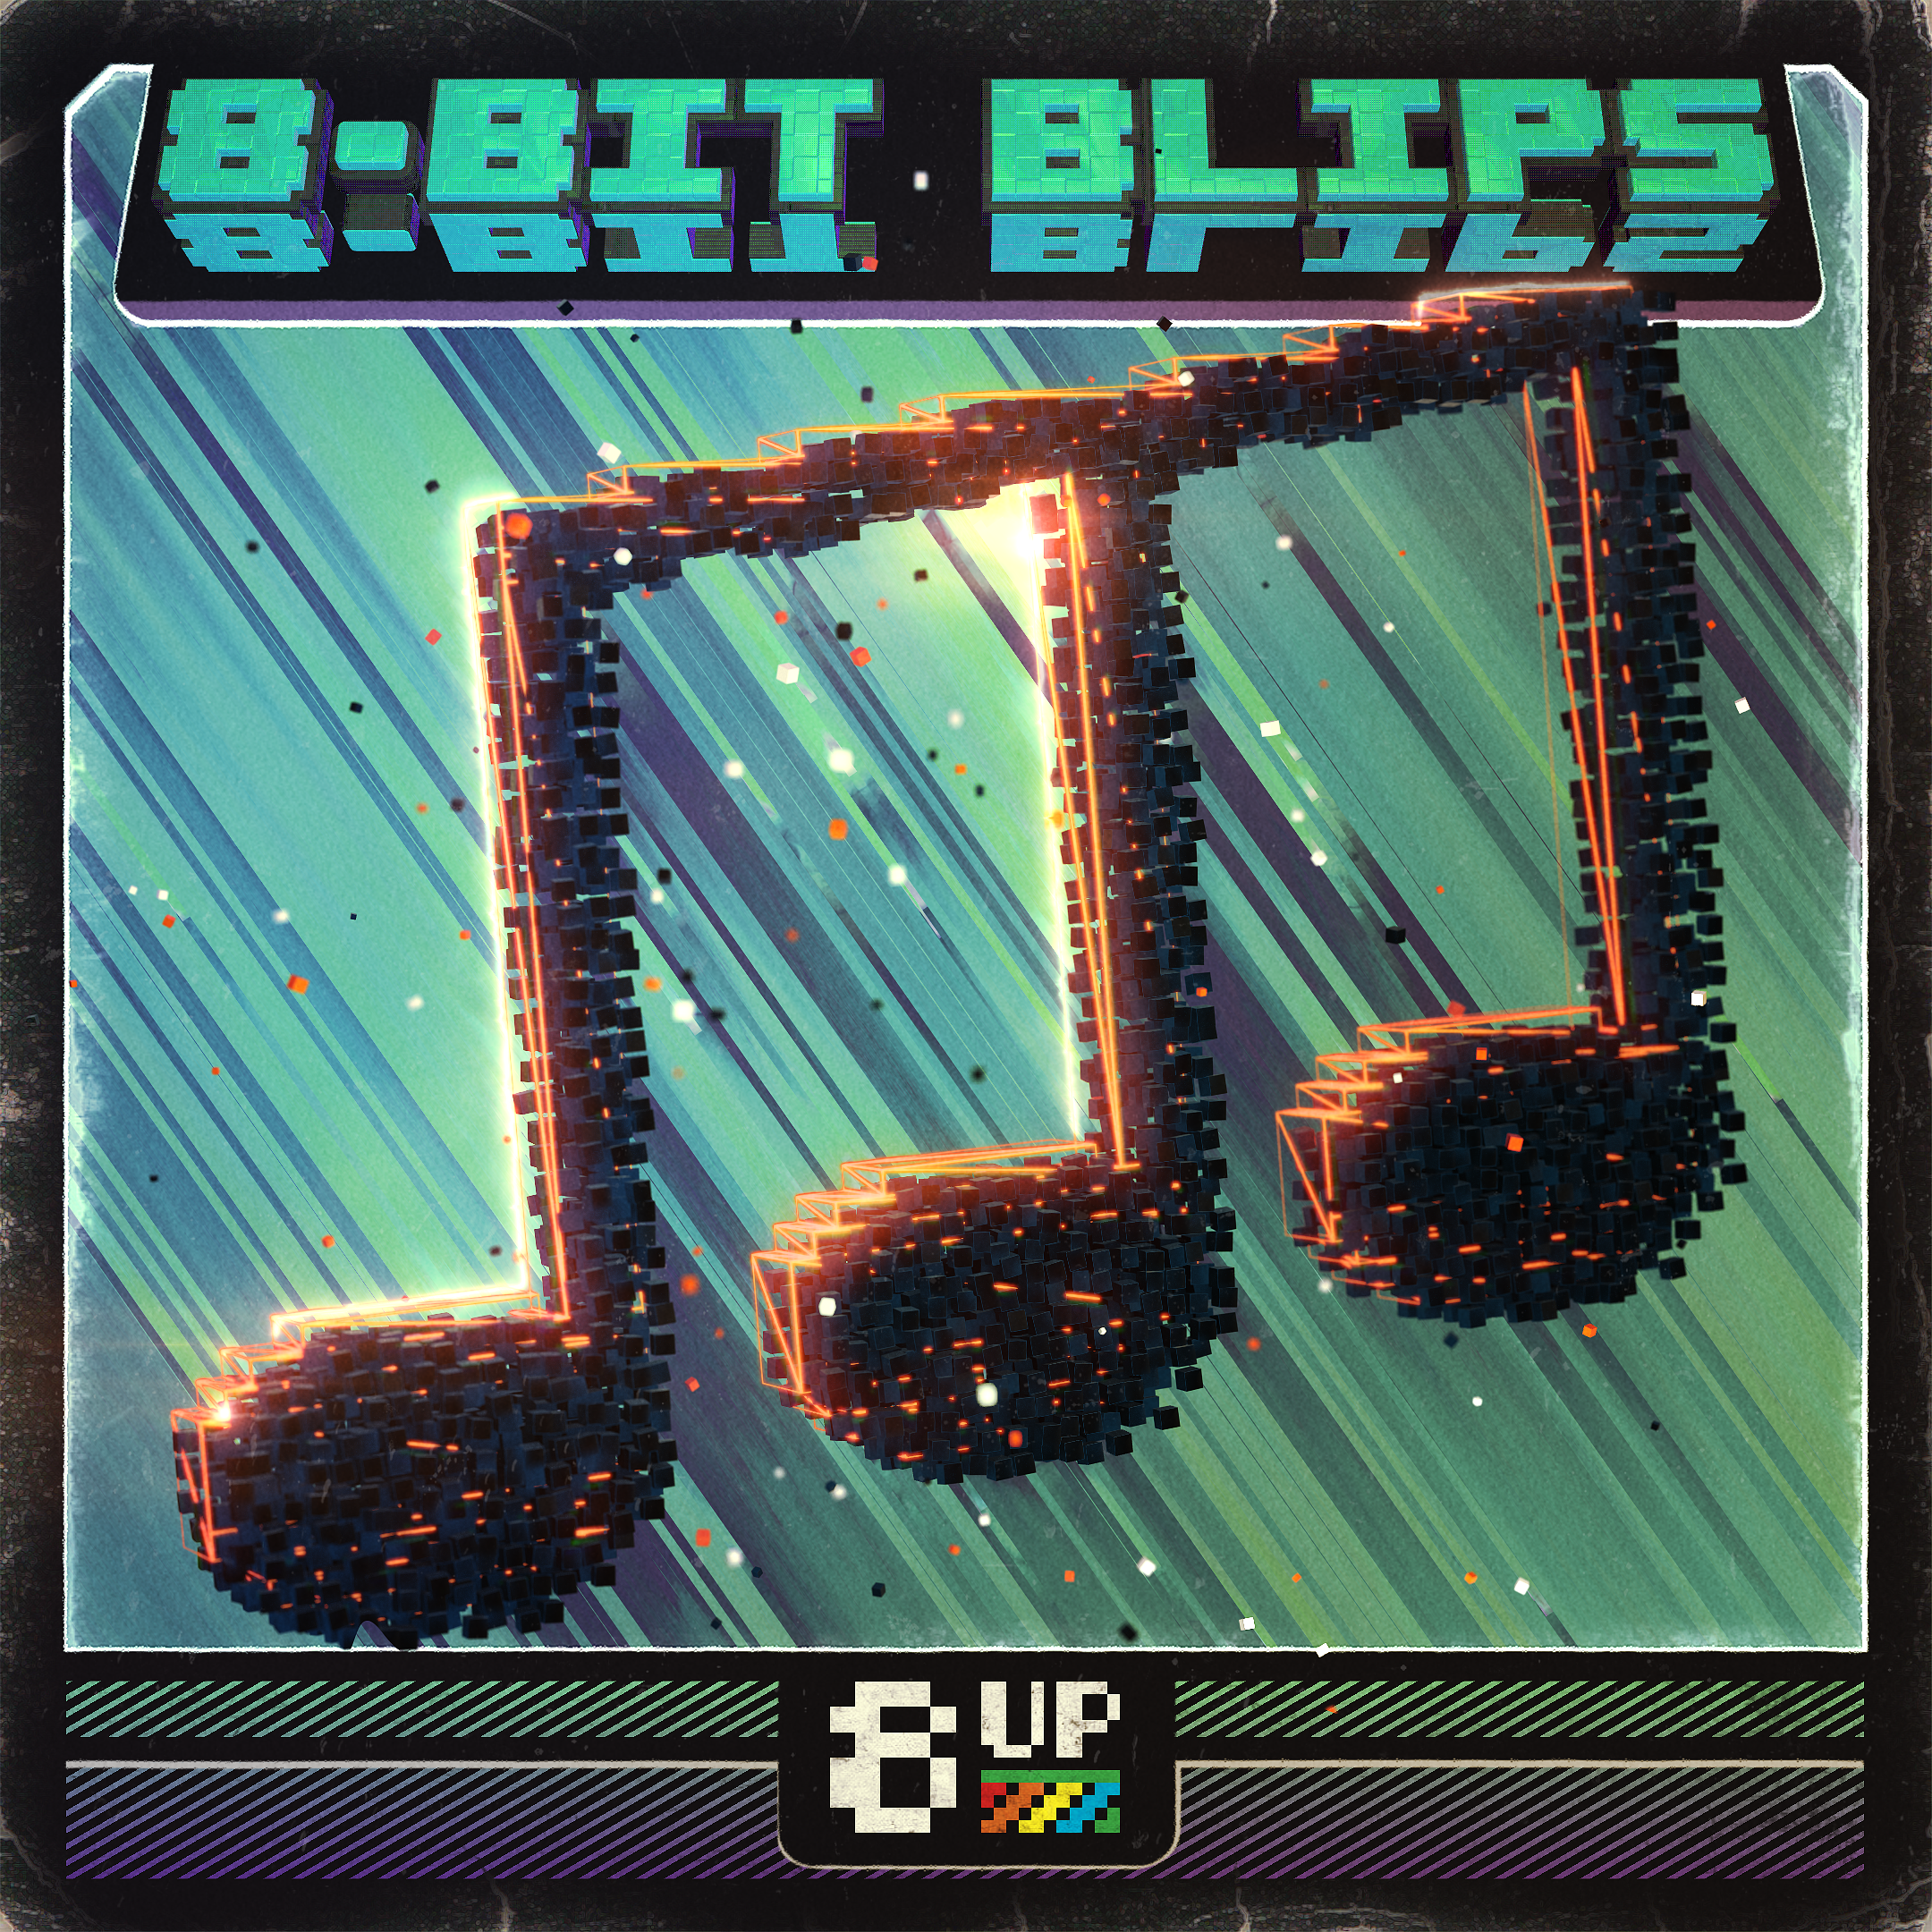 8-Bit Blips Packshot by 8UP